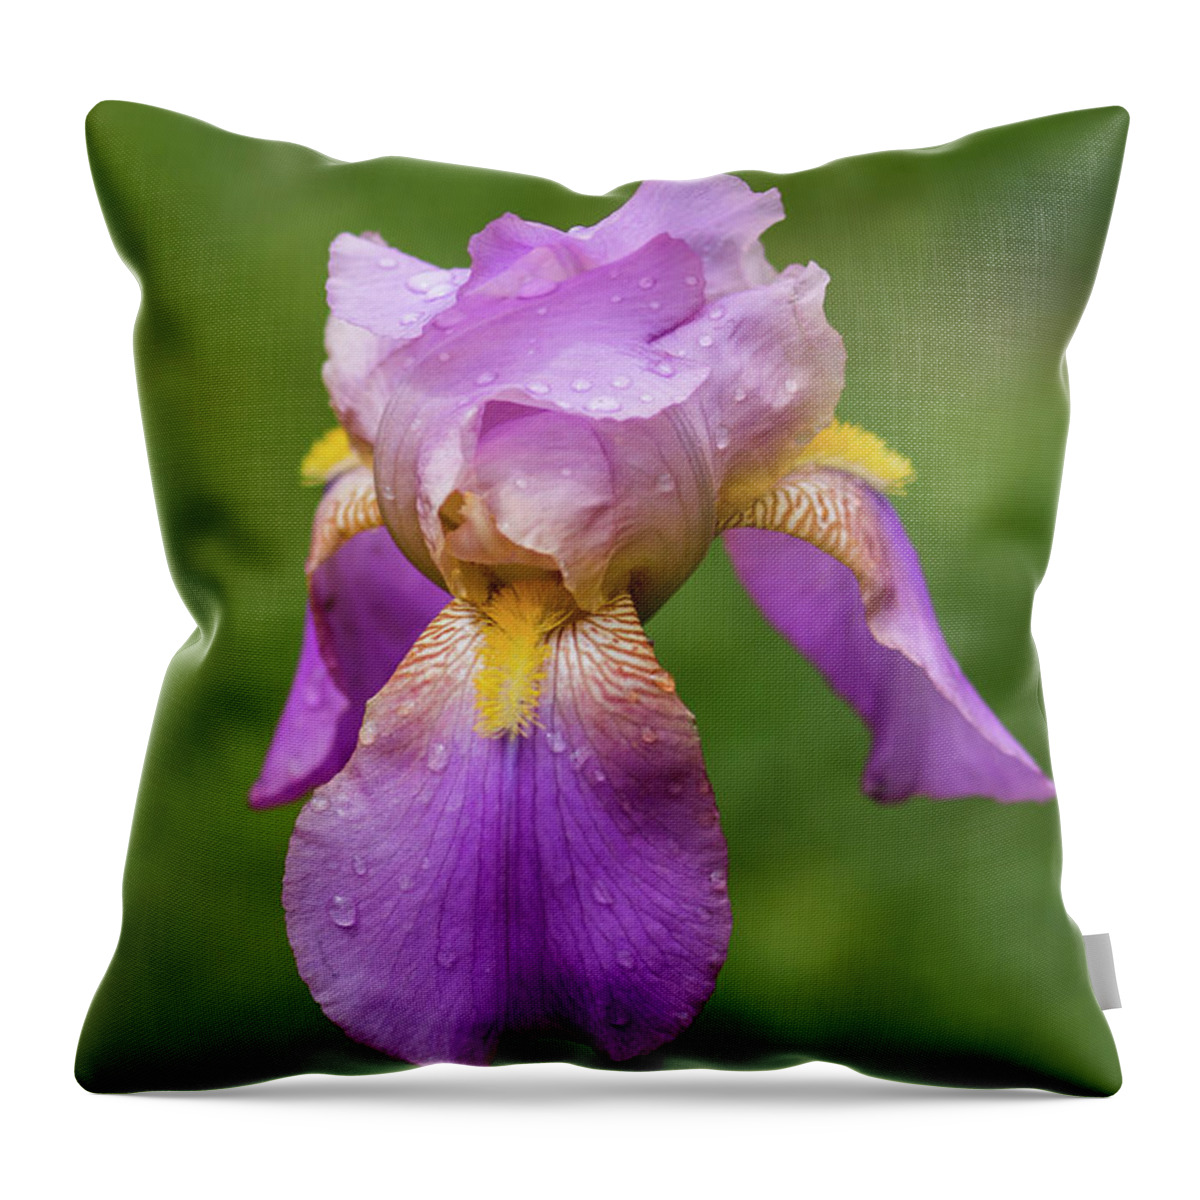 Iris Throw Pillow featuring the photograph Bearded Iris by Lisa Lemmons-Powers